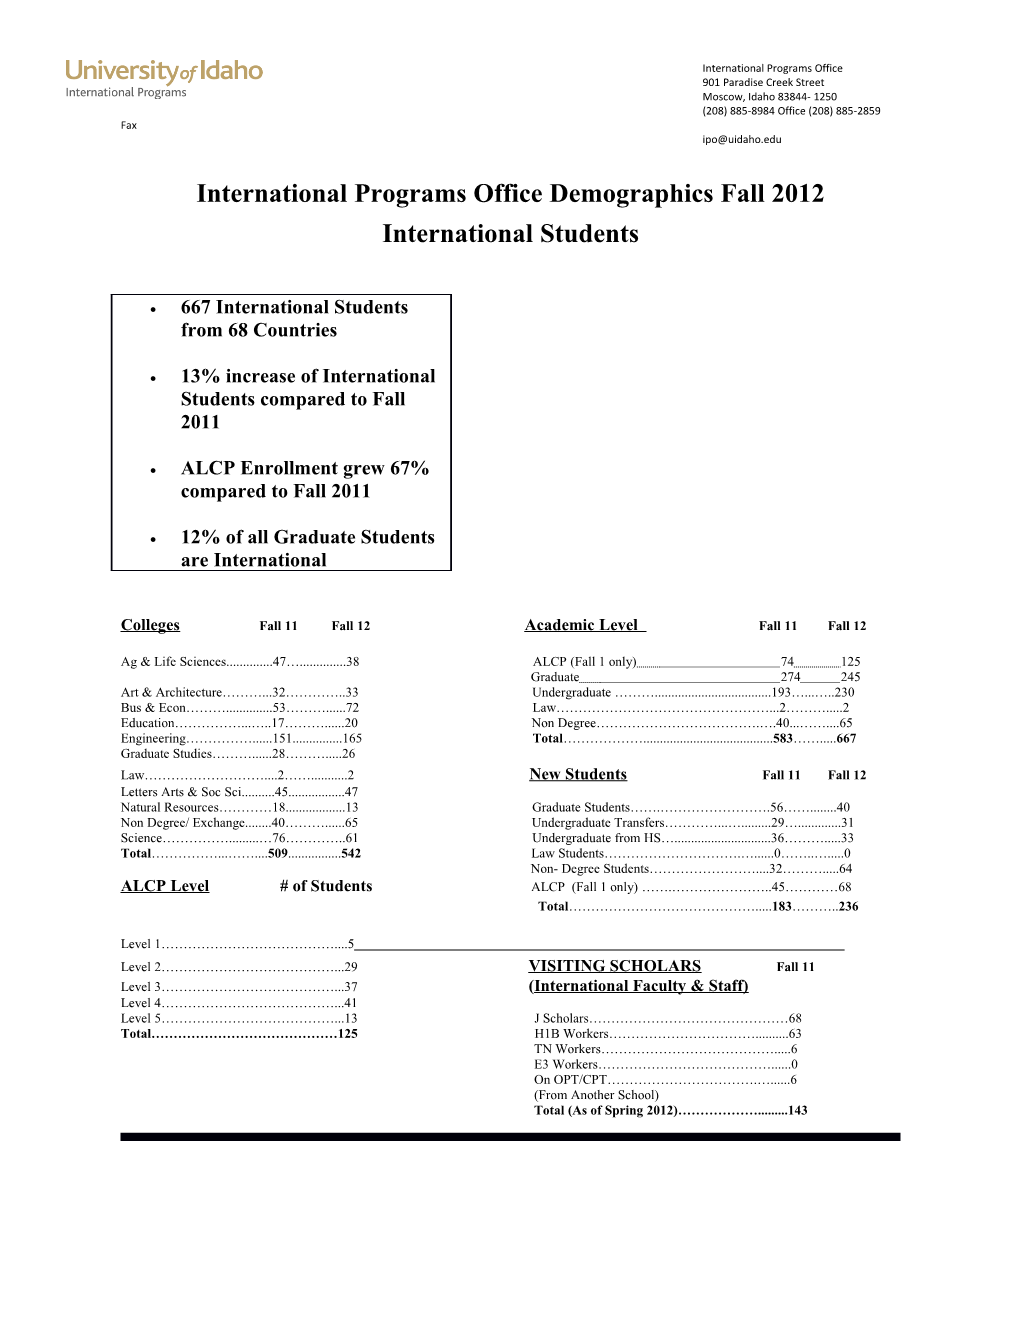 International Programs Office Demographicsfall 2012